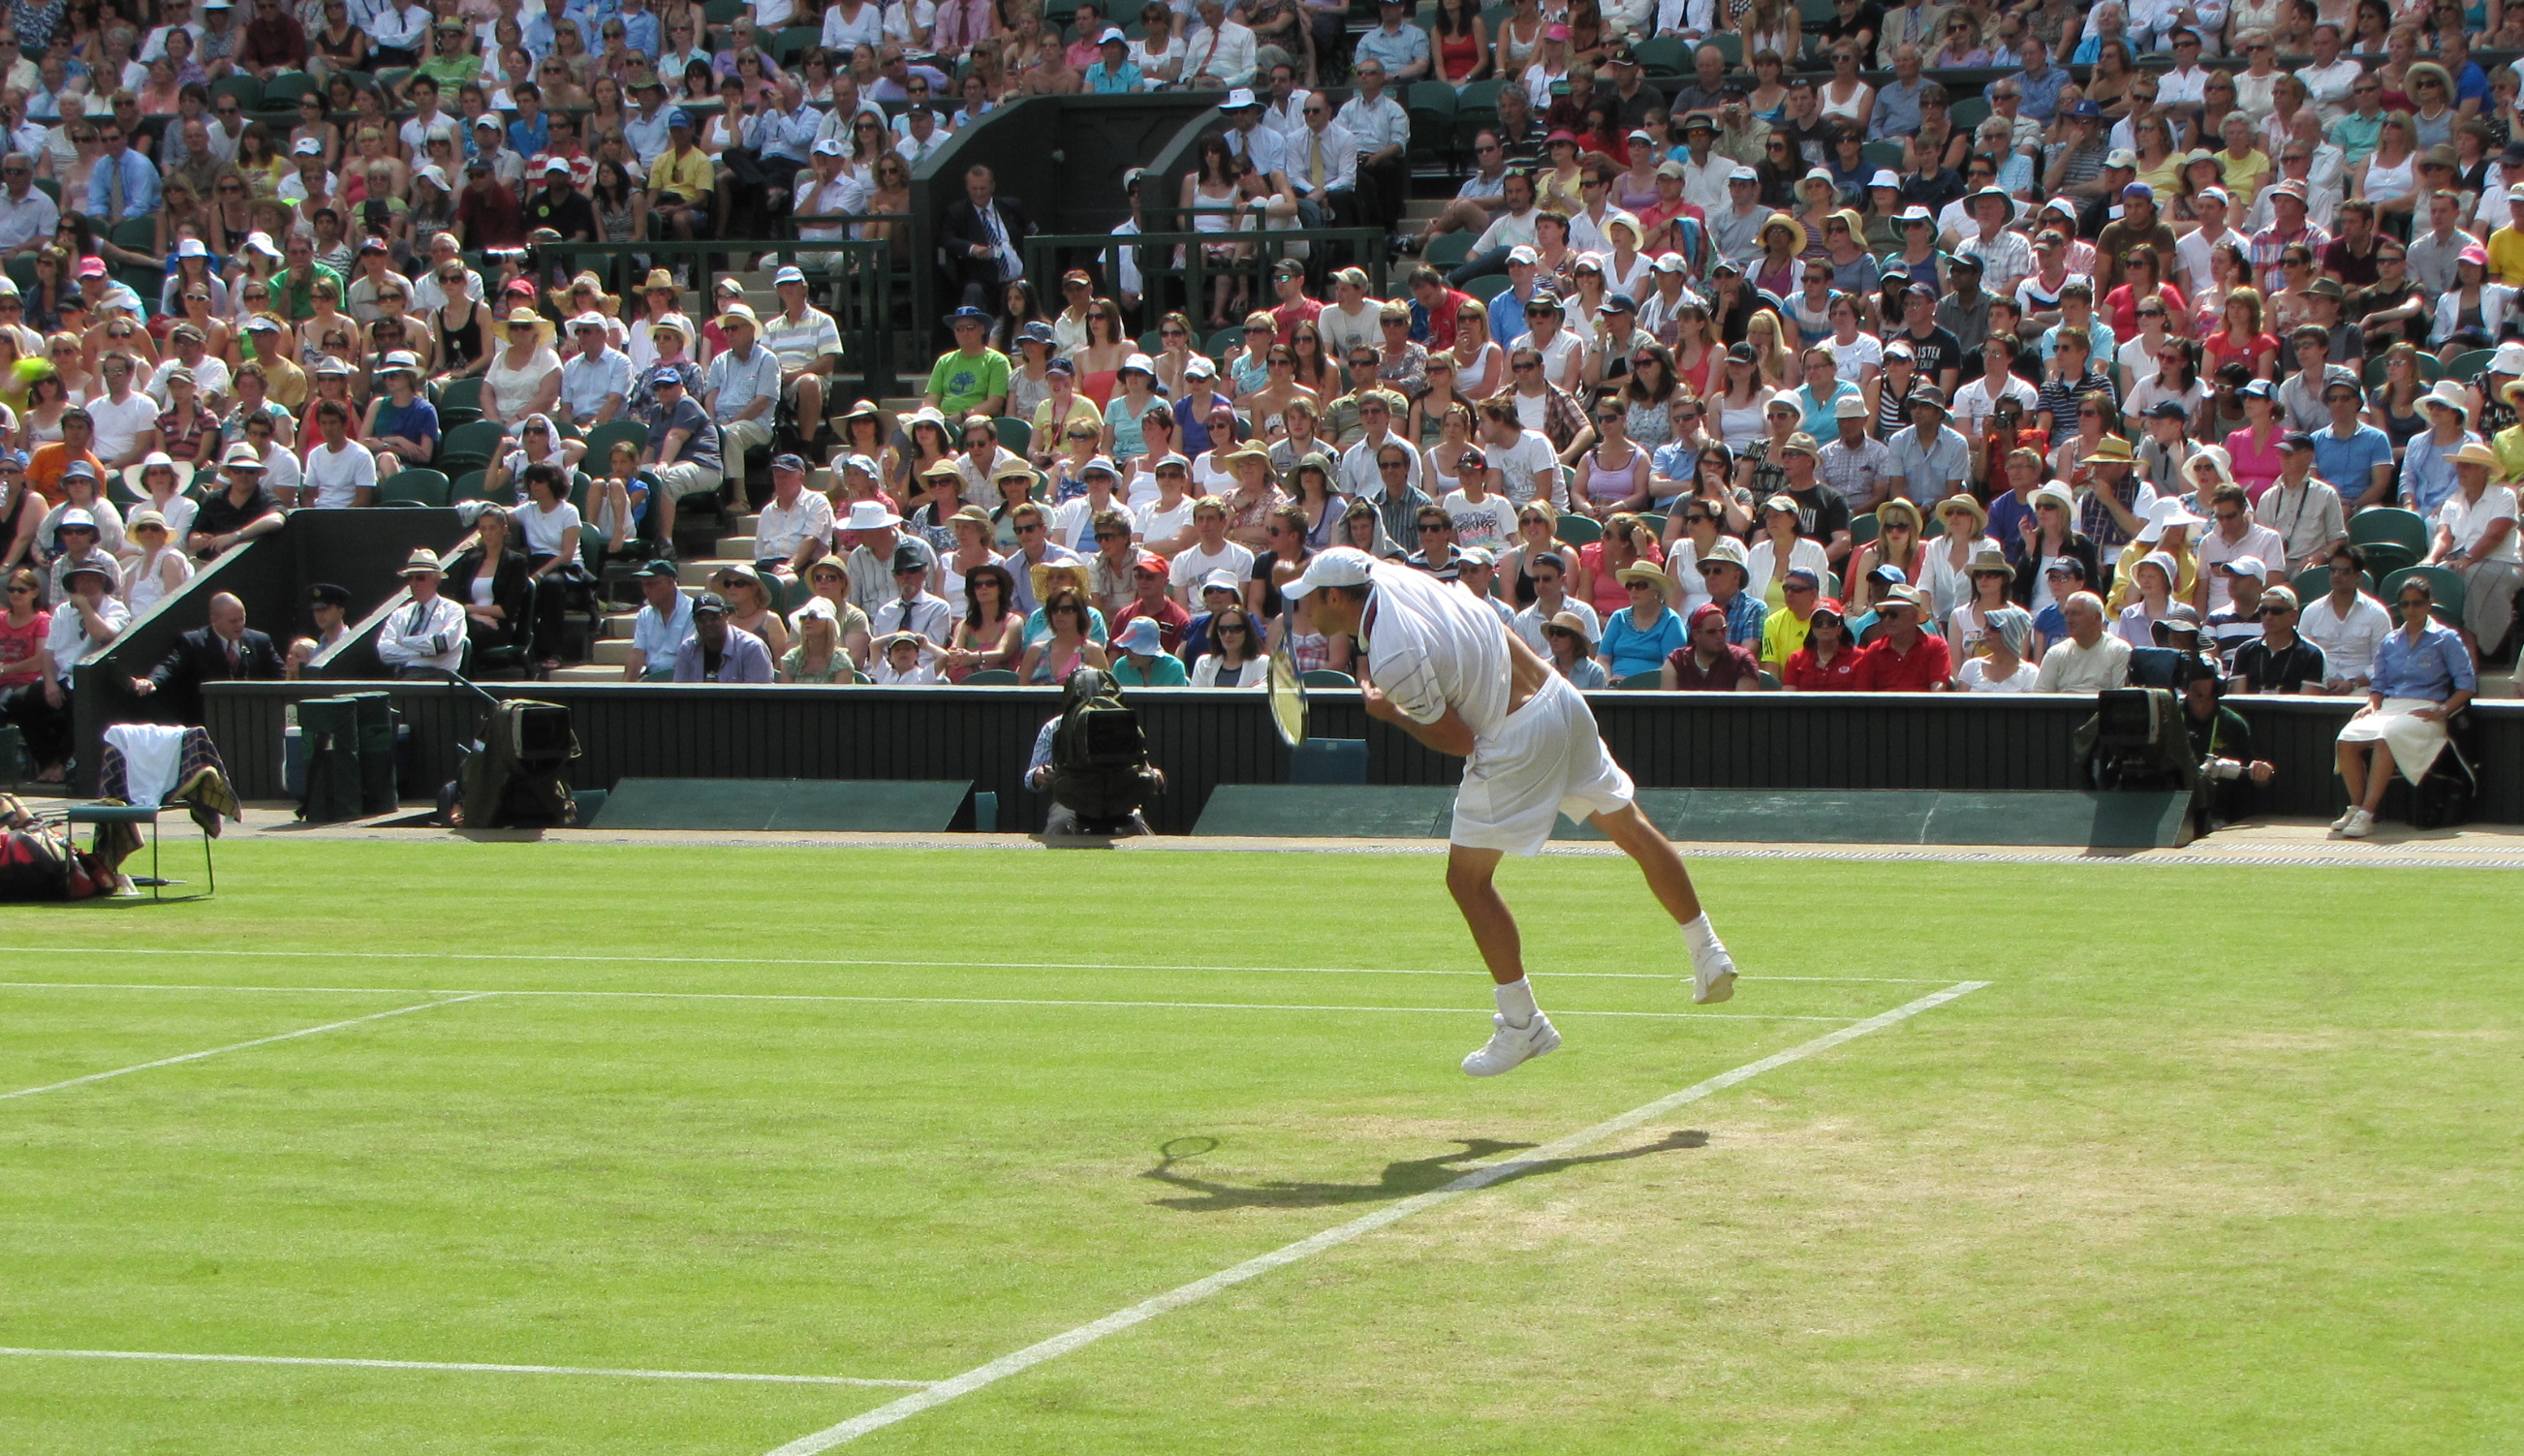 Andy_Roddick_at_the_2010_Wimbledon_Championships_02